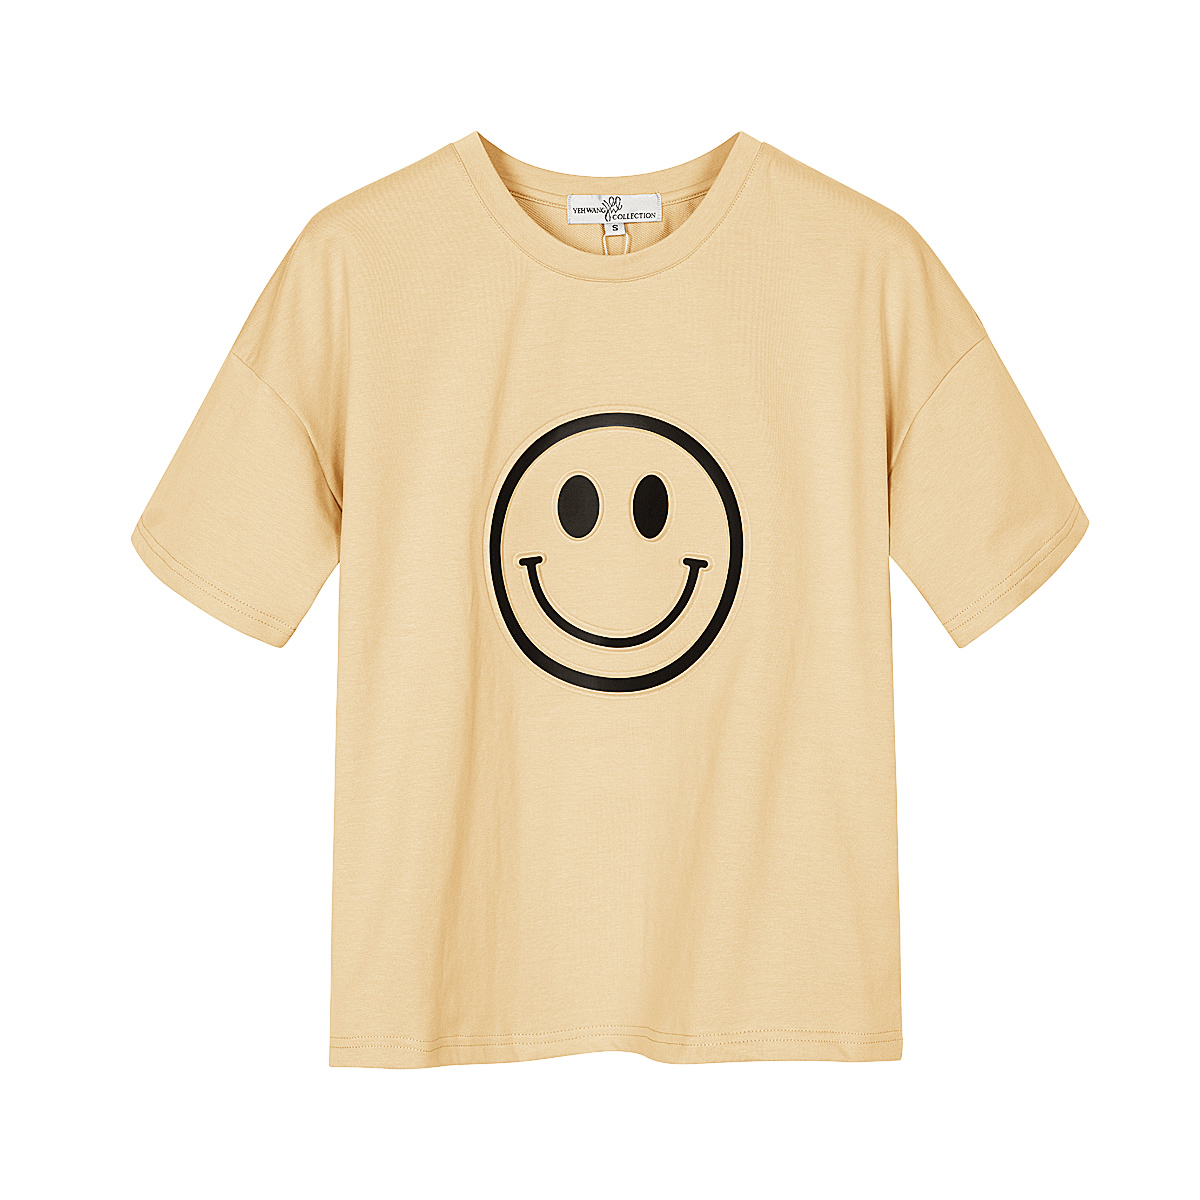 camiseta con cara sonriente